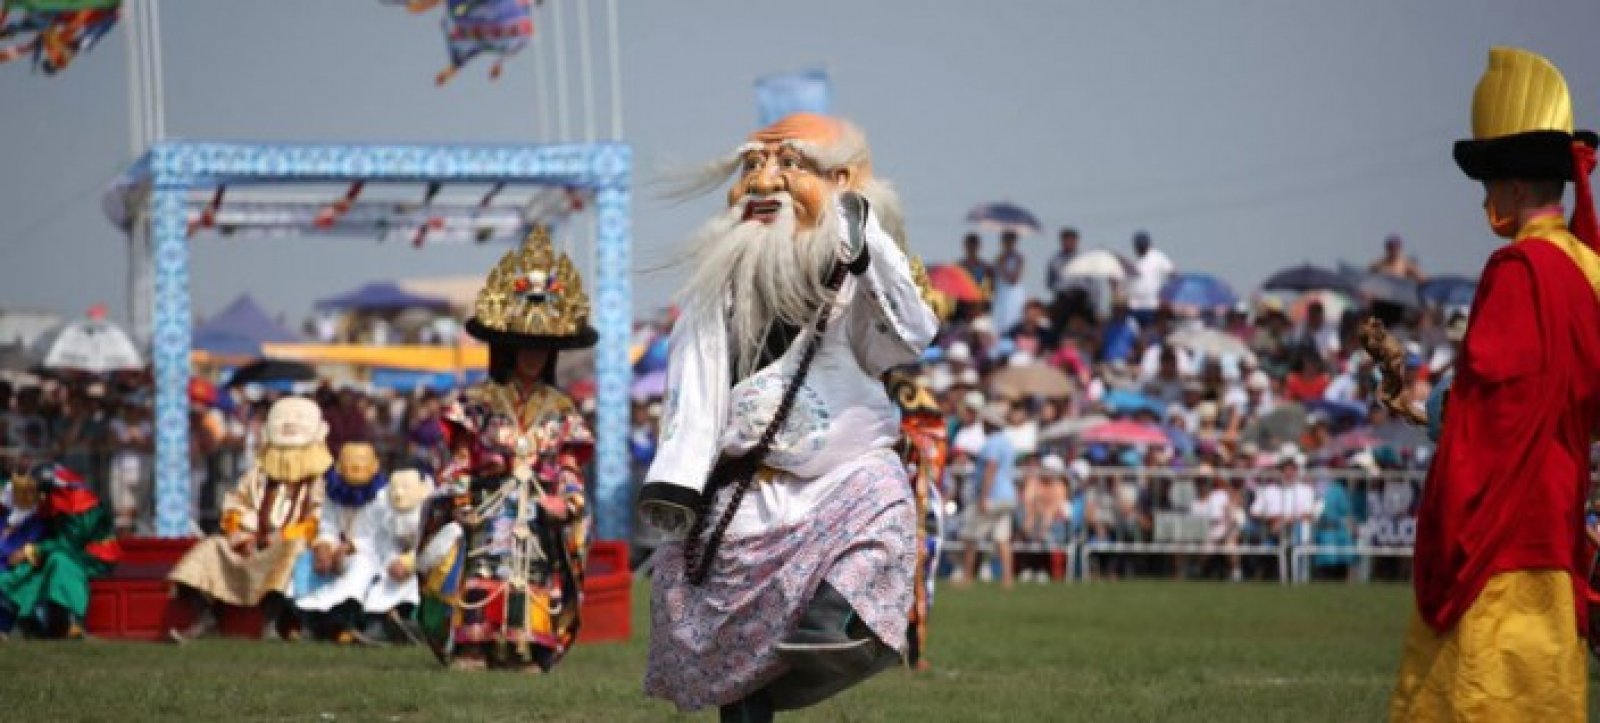 Danshig Naadam Festival 2019